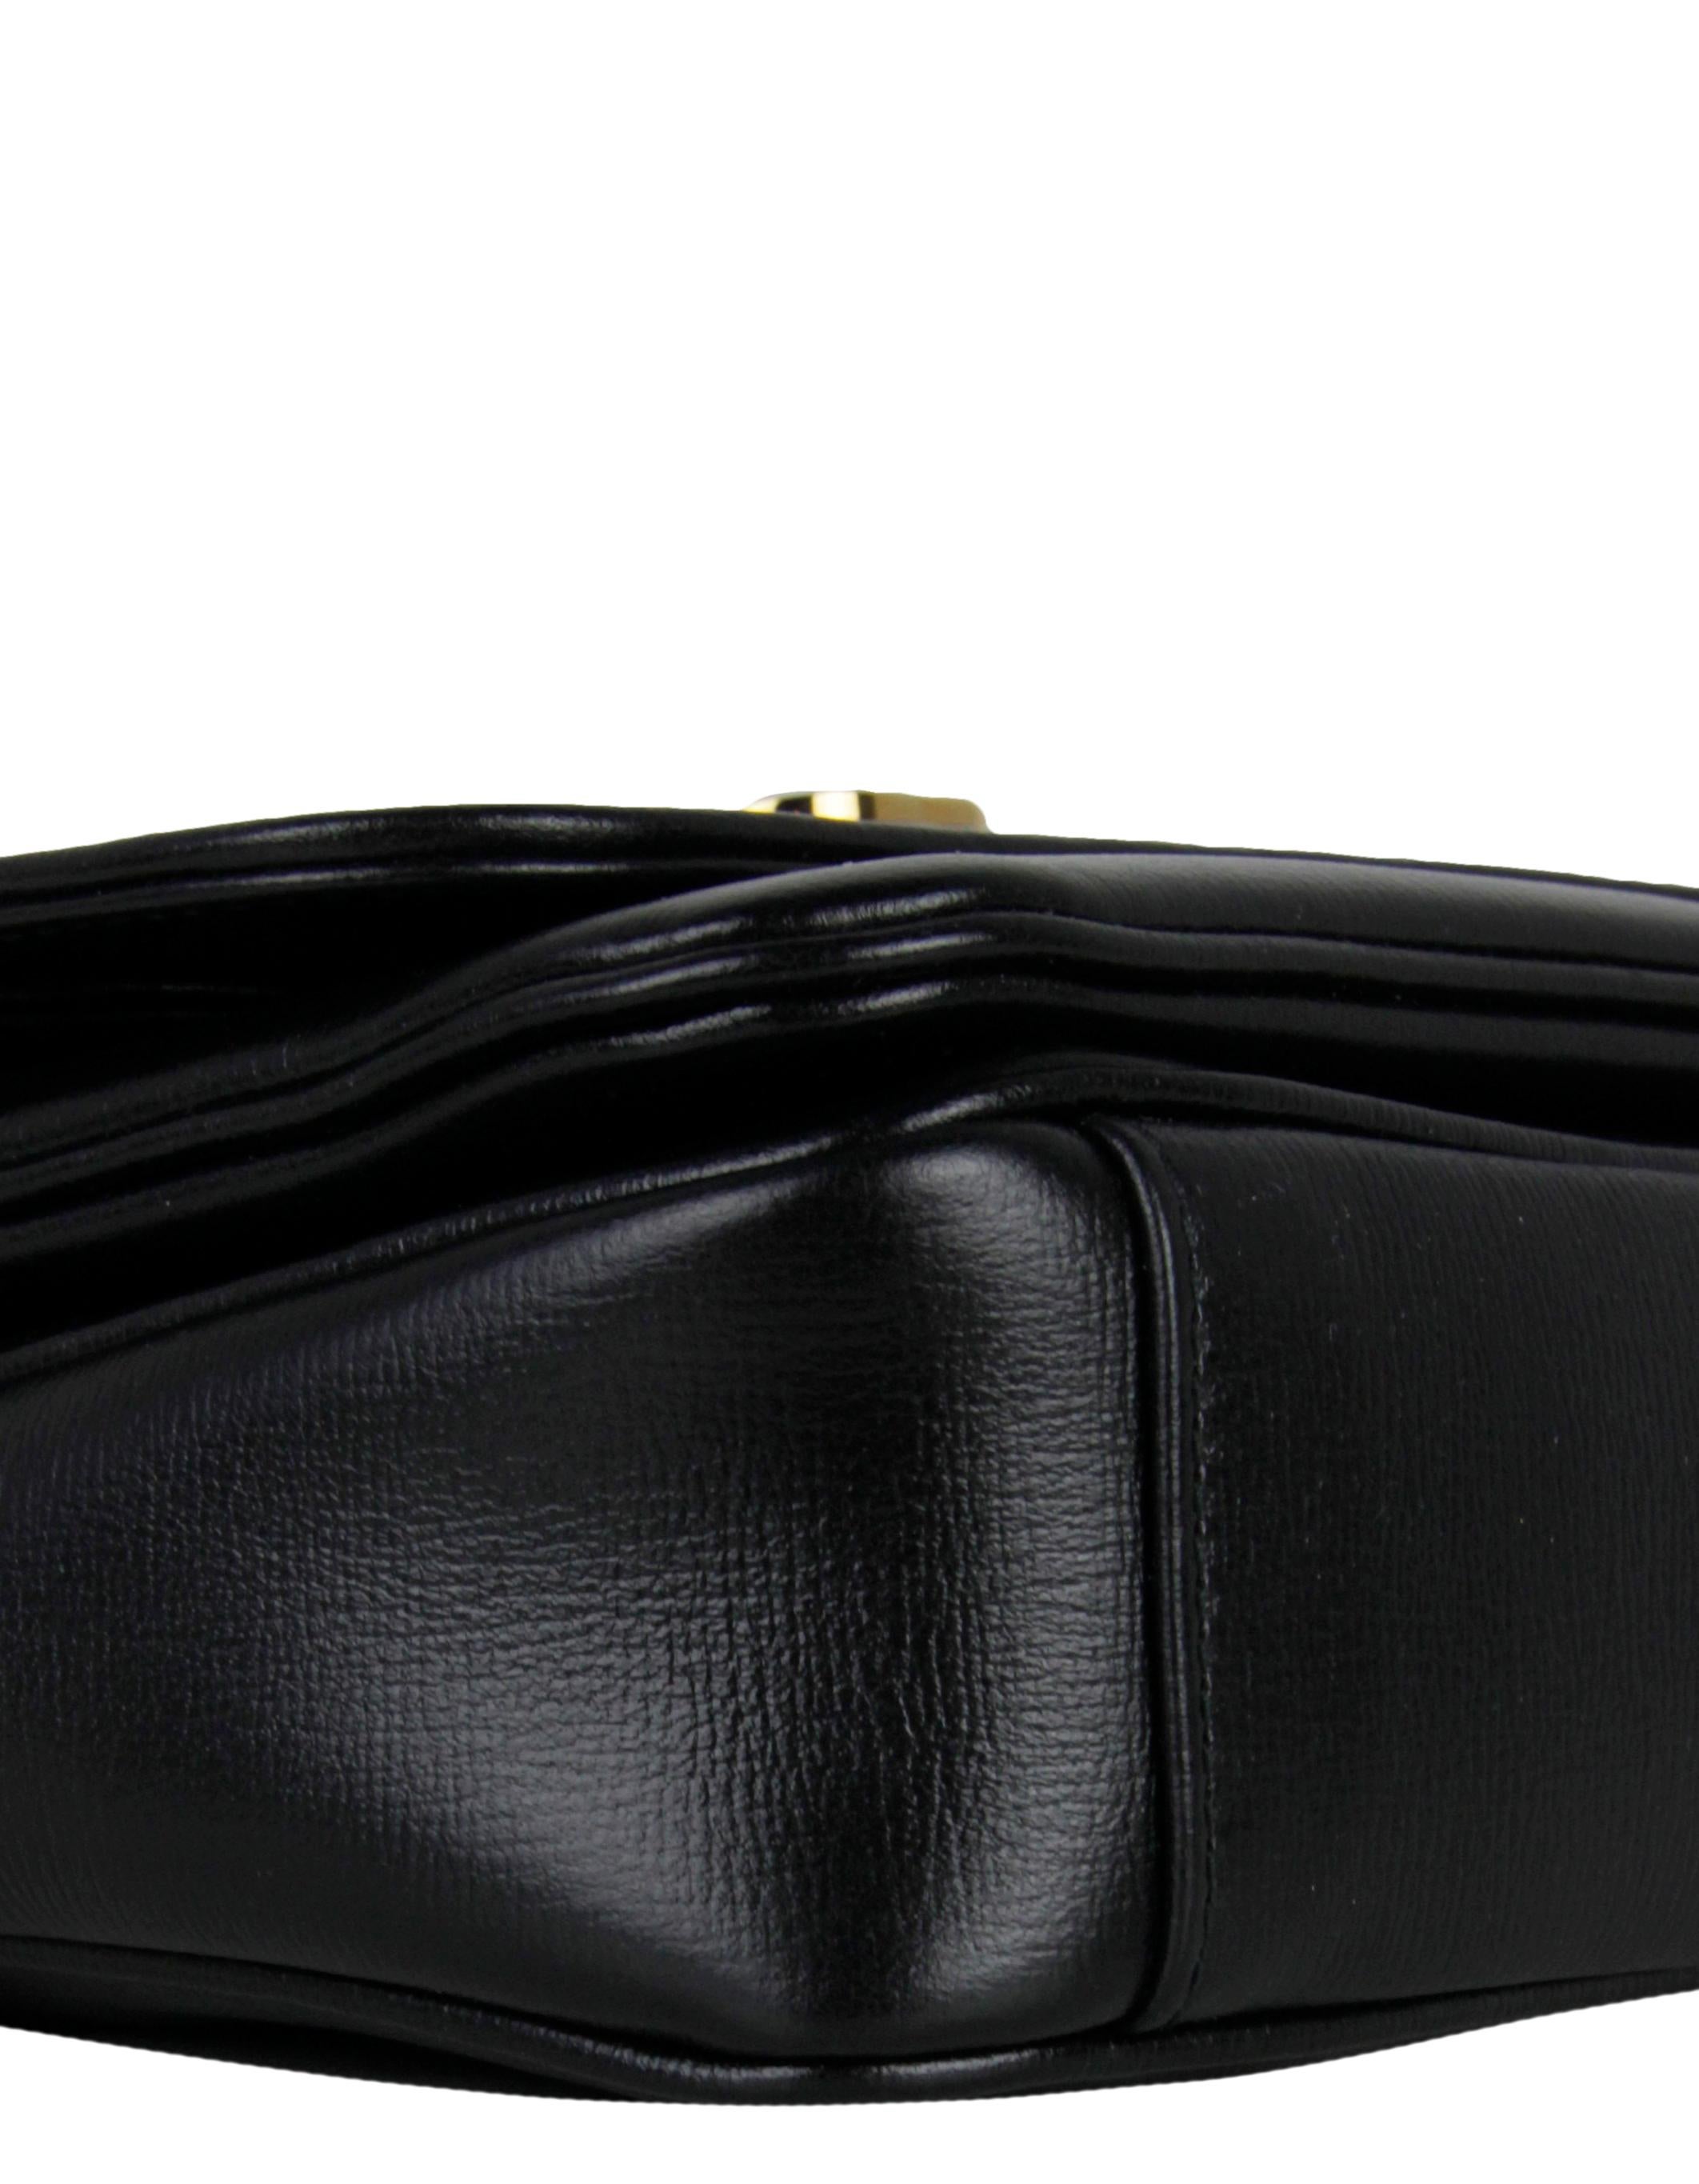 black gucci purse with gold chain